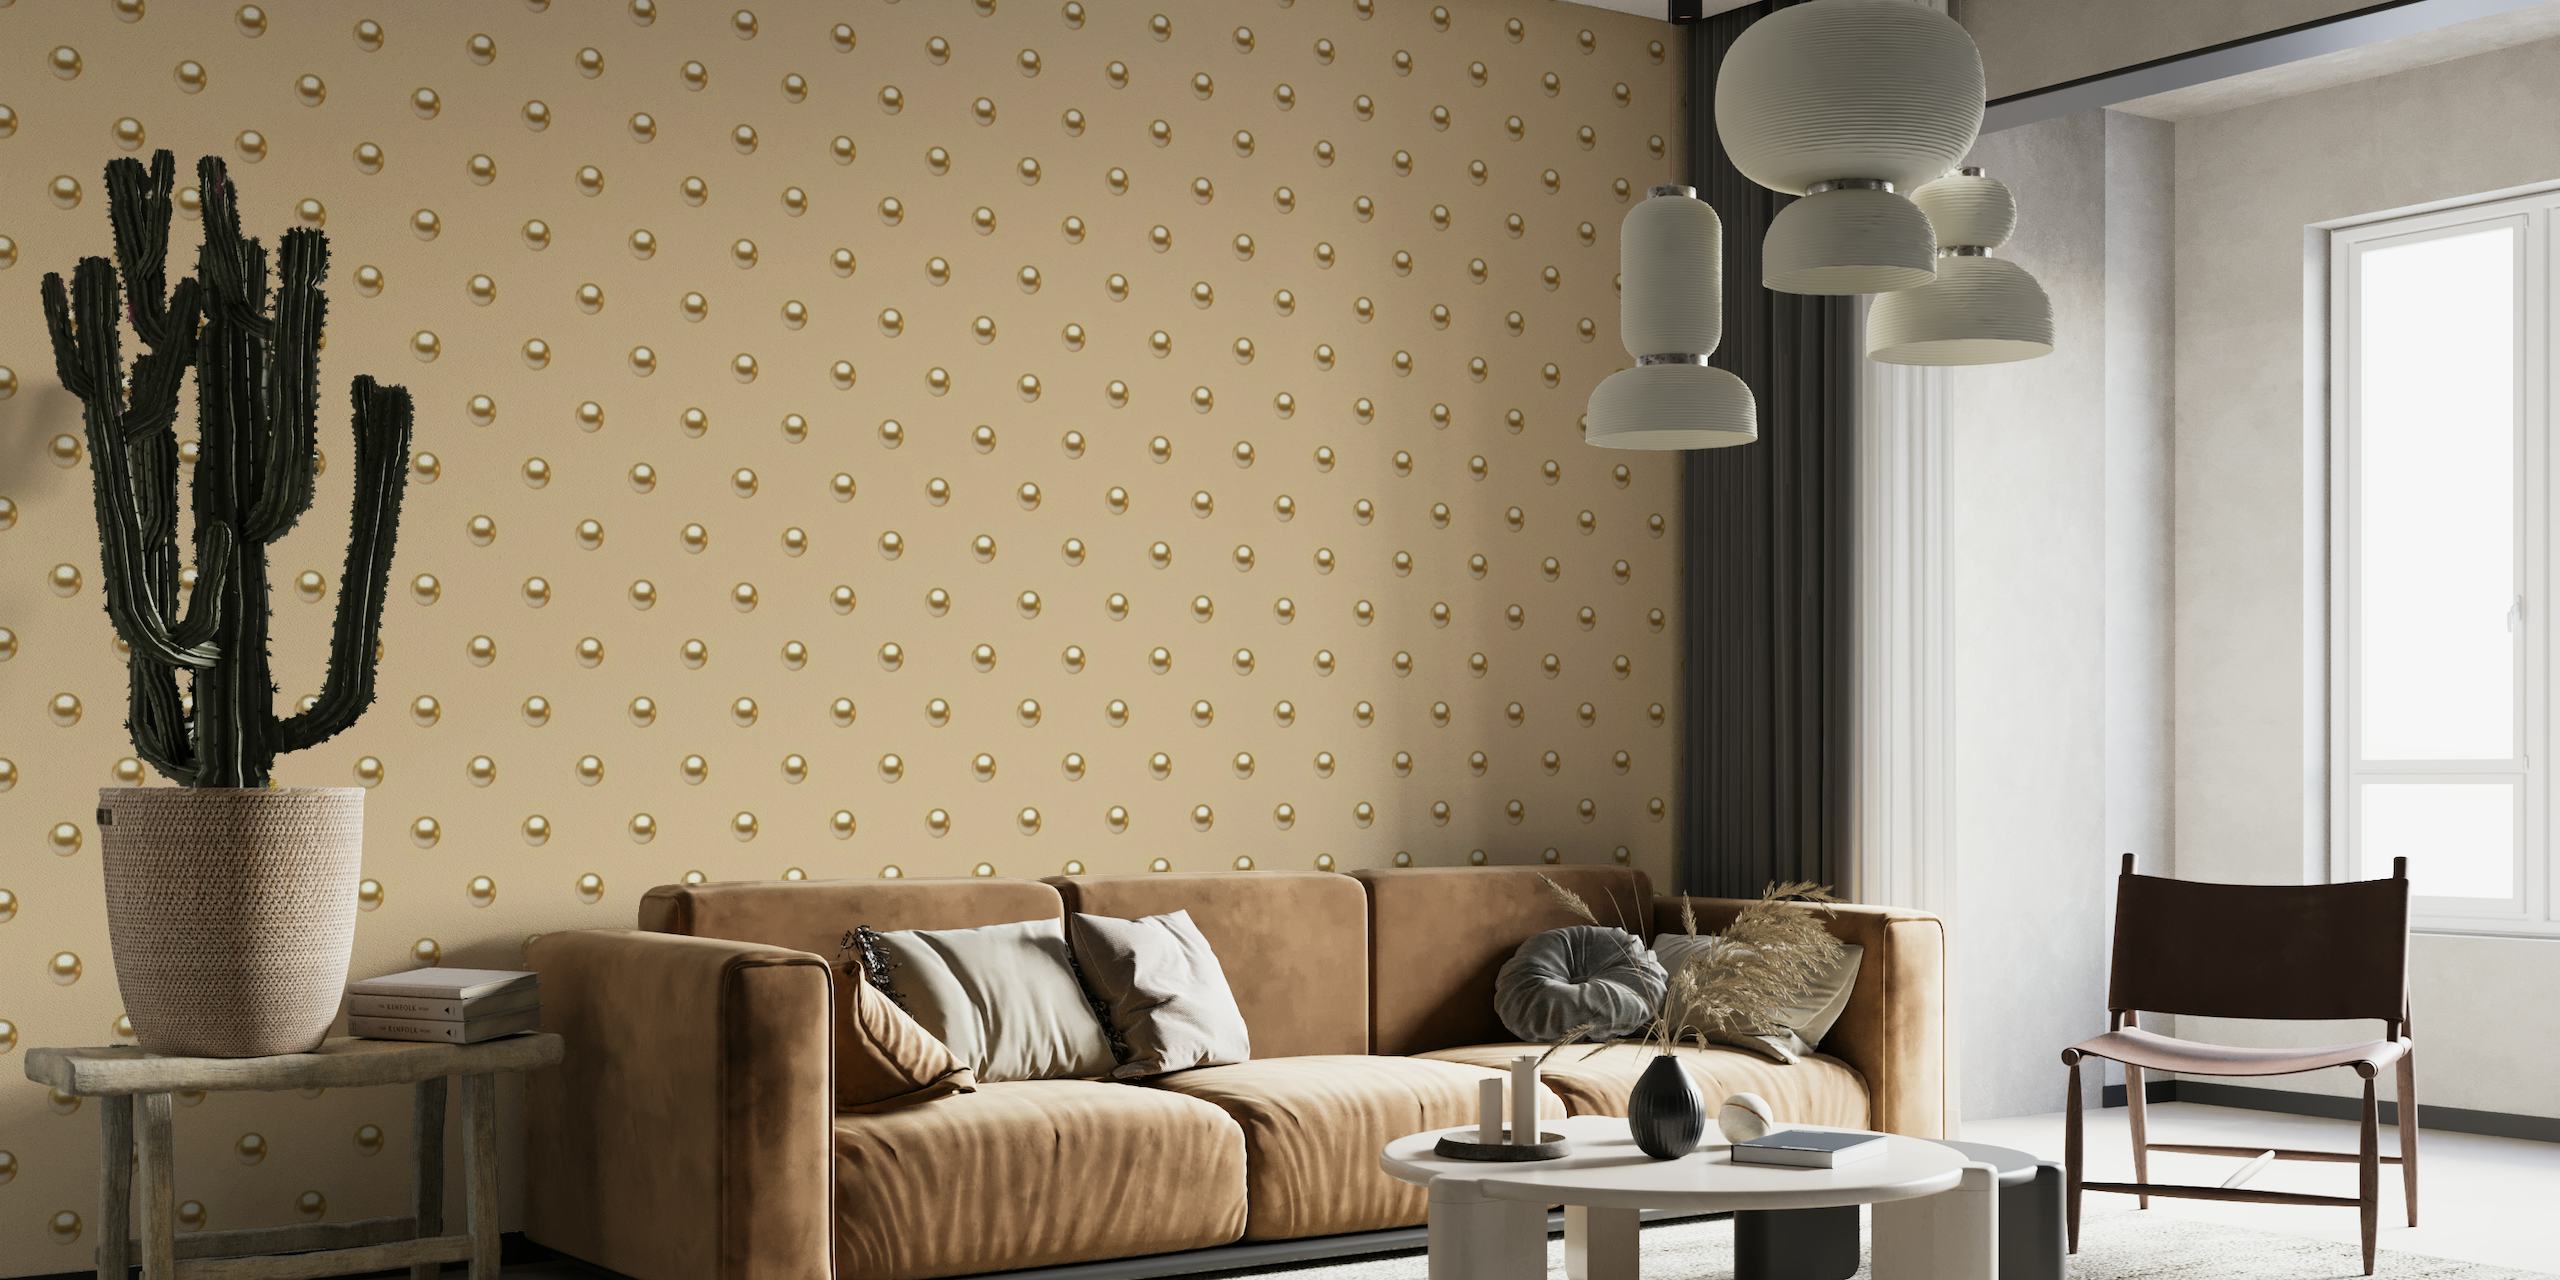 Pearl Polka Dots 4 zidna slika sa sjajnim točkicama na neutralnoj pozadini prikladna za elegantno uređenje doma